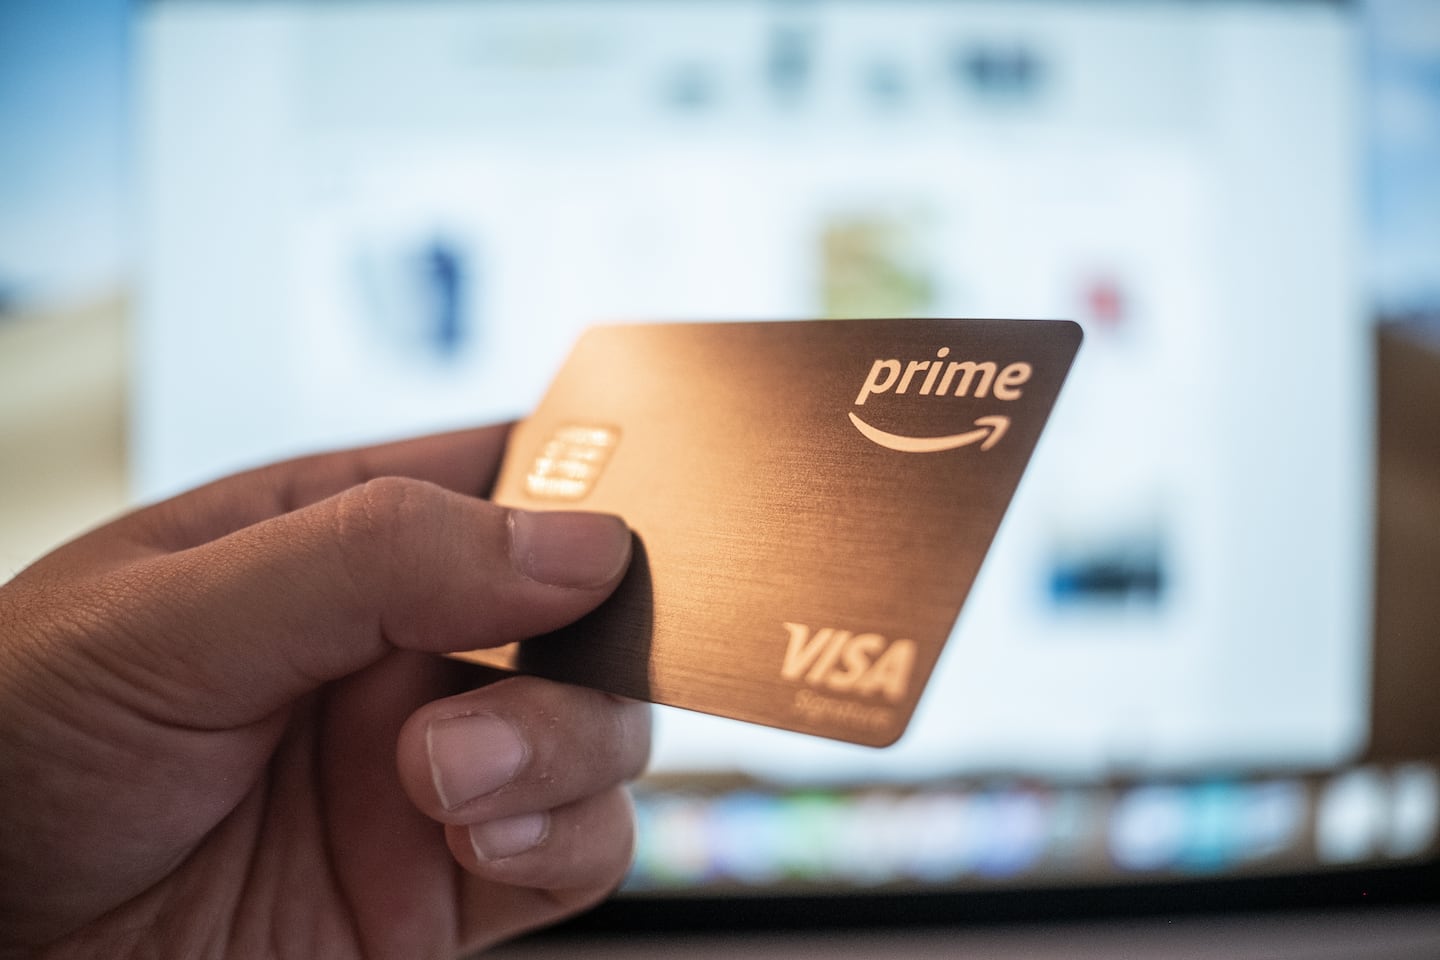 Amazon Rewards Visa Signature card. Shutterstock.